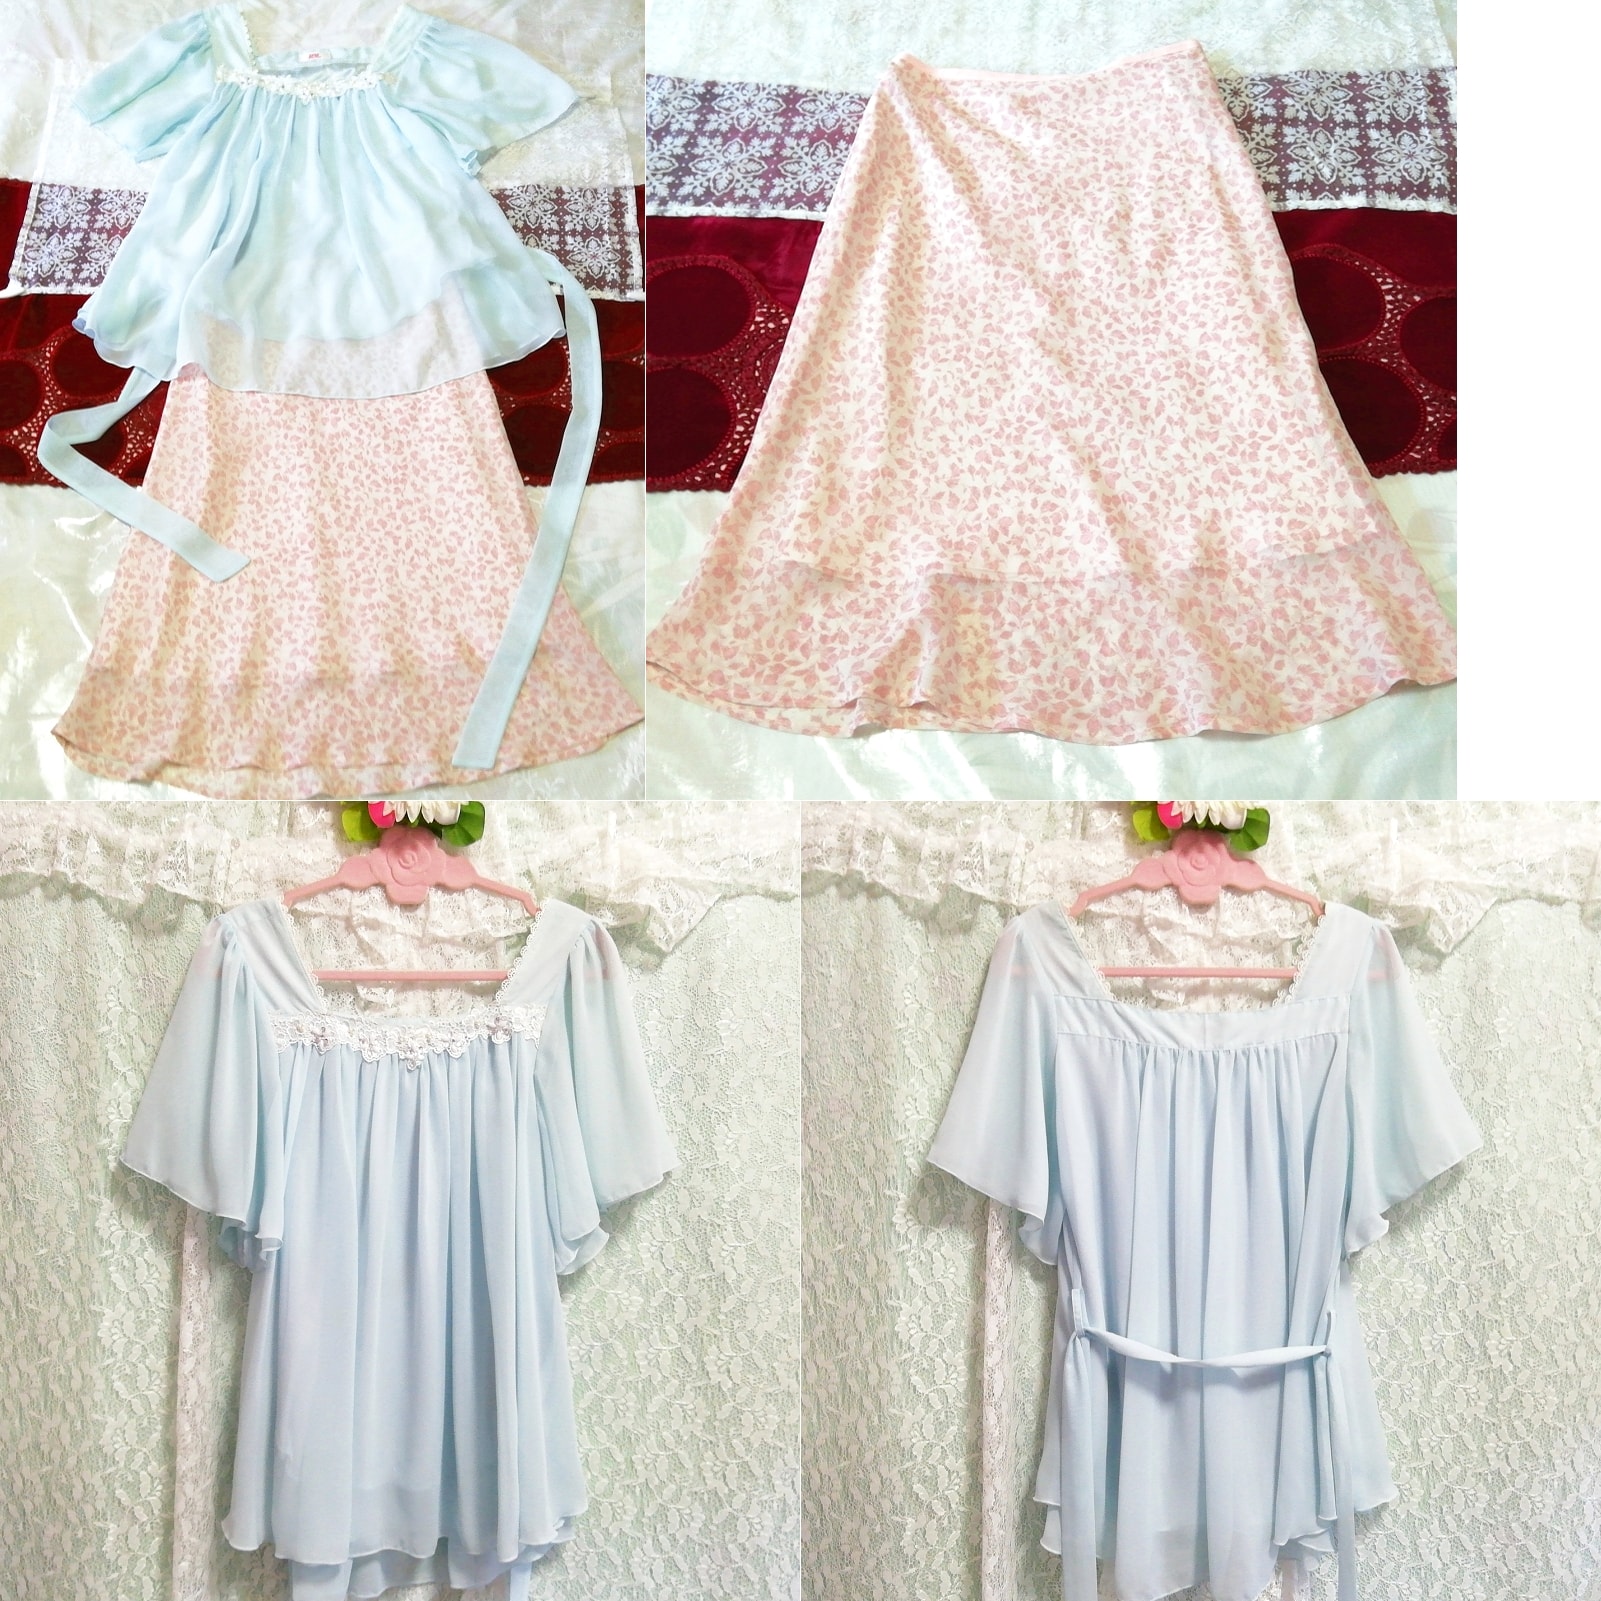 Túnica de gasa azul claro camisón bata de dormir falda con estampado floral rosa 2P, moda, moda para damas, ropa de dormir, pijama